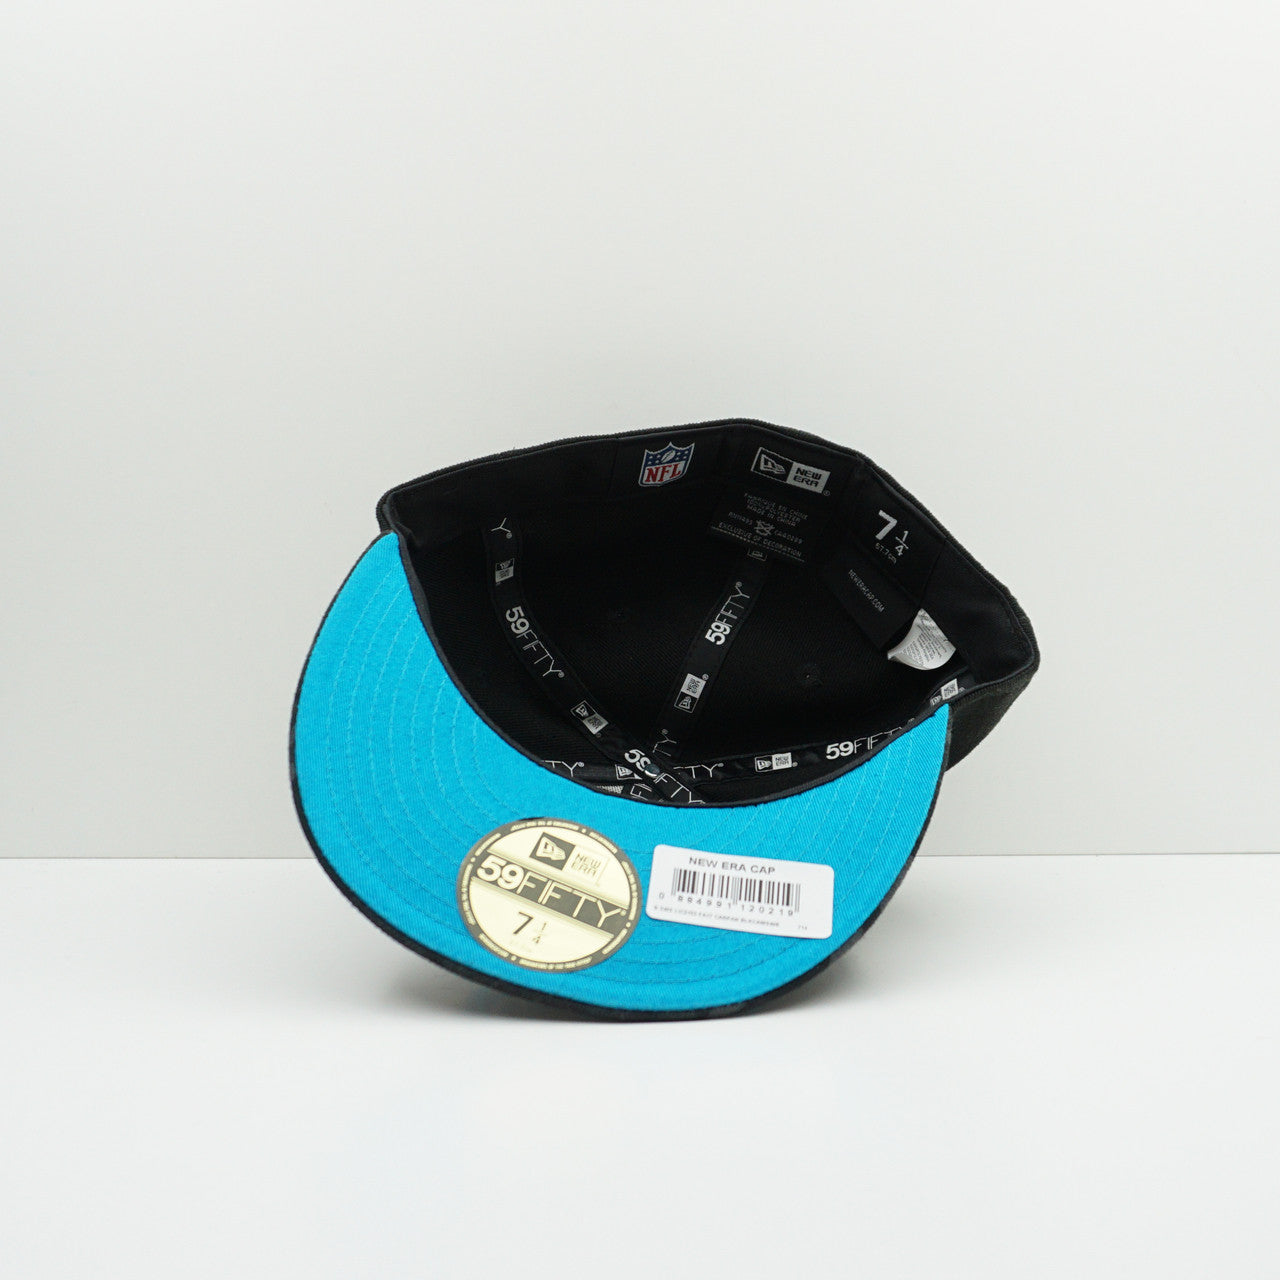 New Era Jacksonville Jaguars Black/Blue Fitted Cap